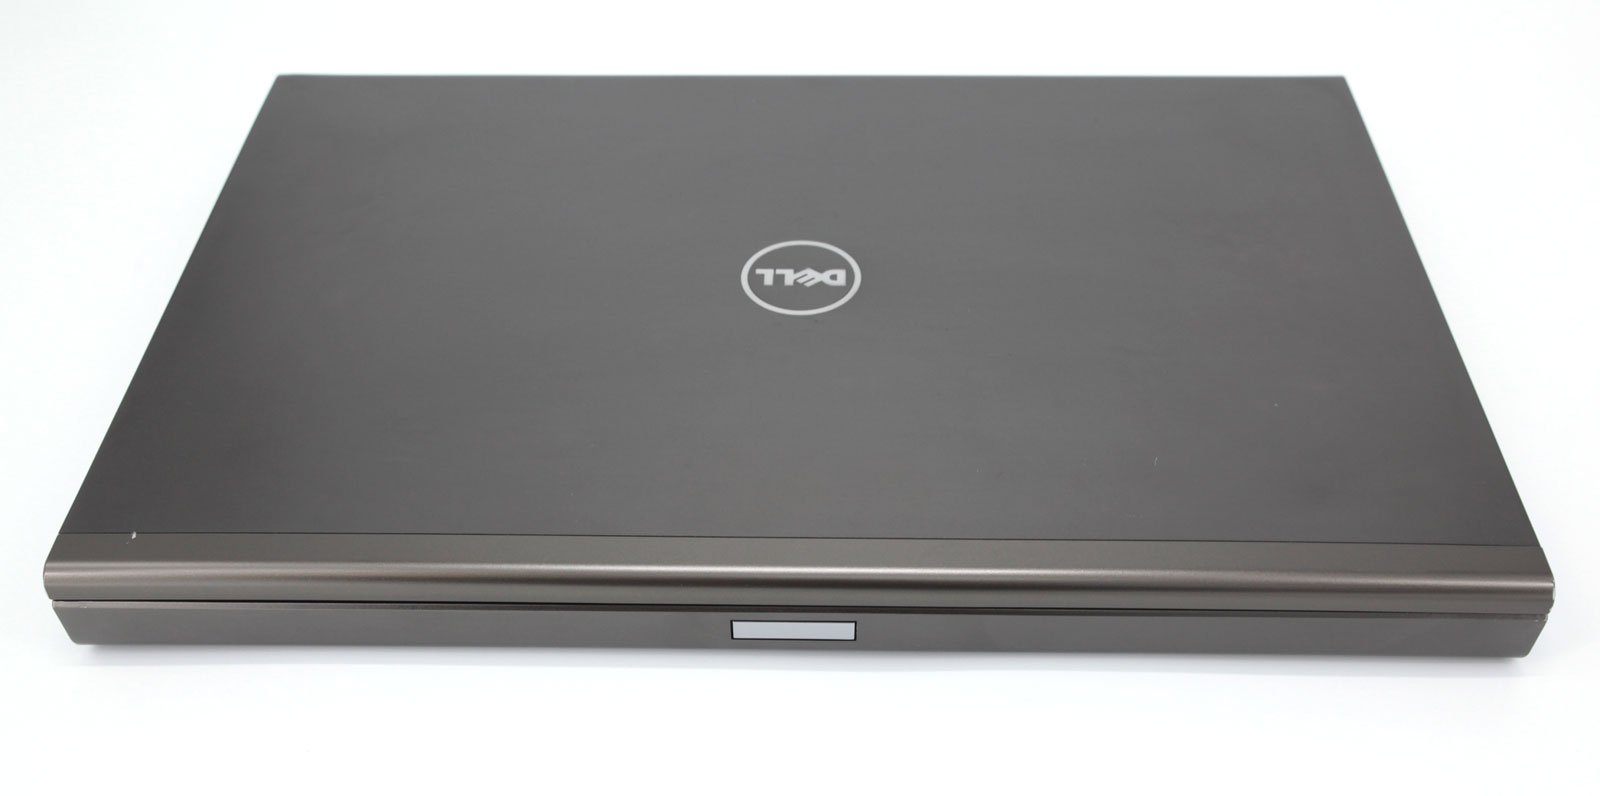 Dell Precision M6800 17.3" Laptop: Core i7, 16GB, K4100M 128GB+HDD Warranty VAT - CruiseTech